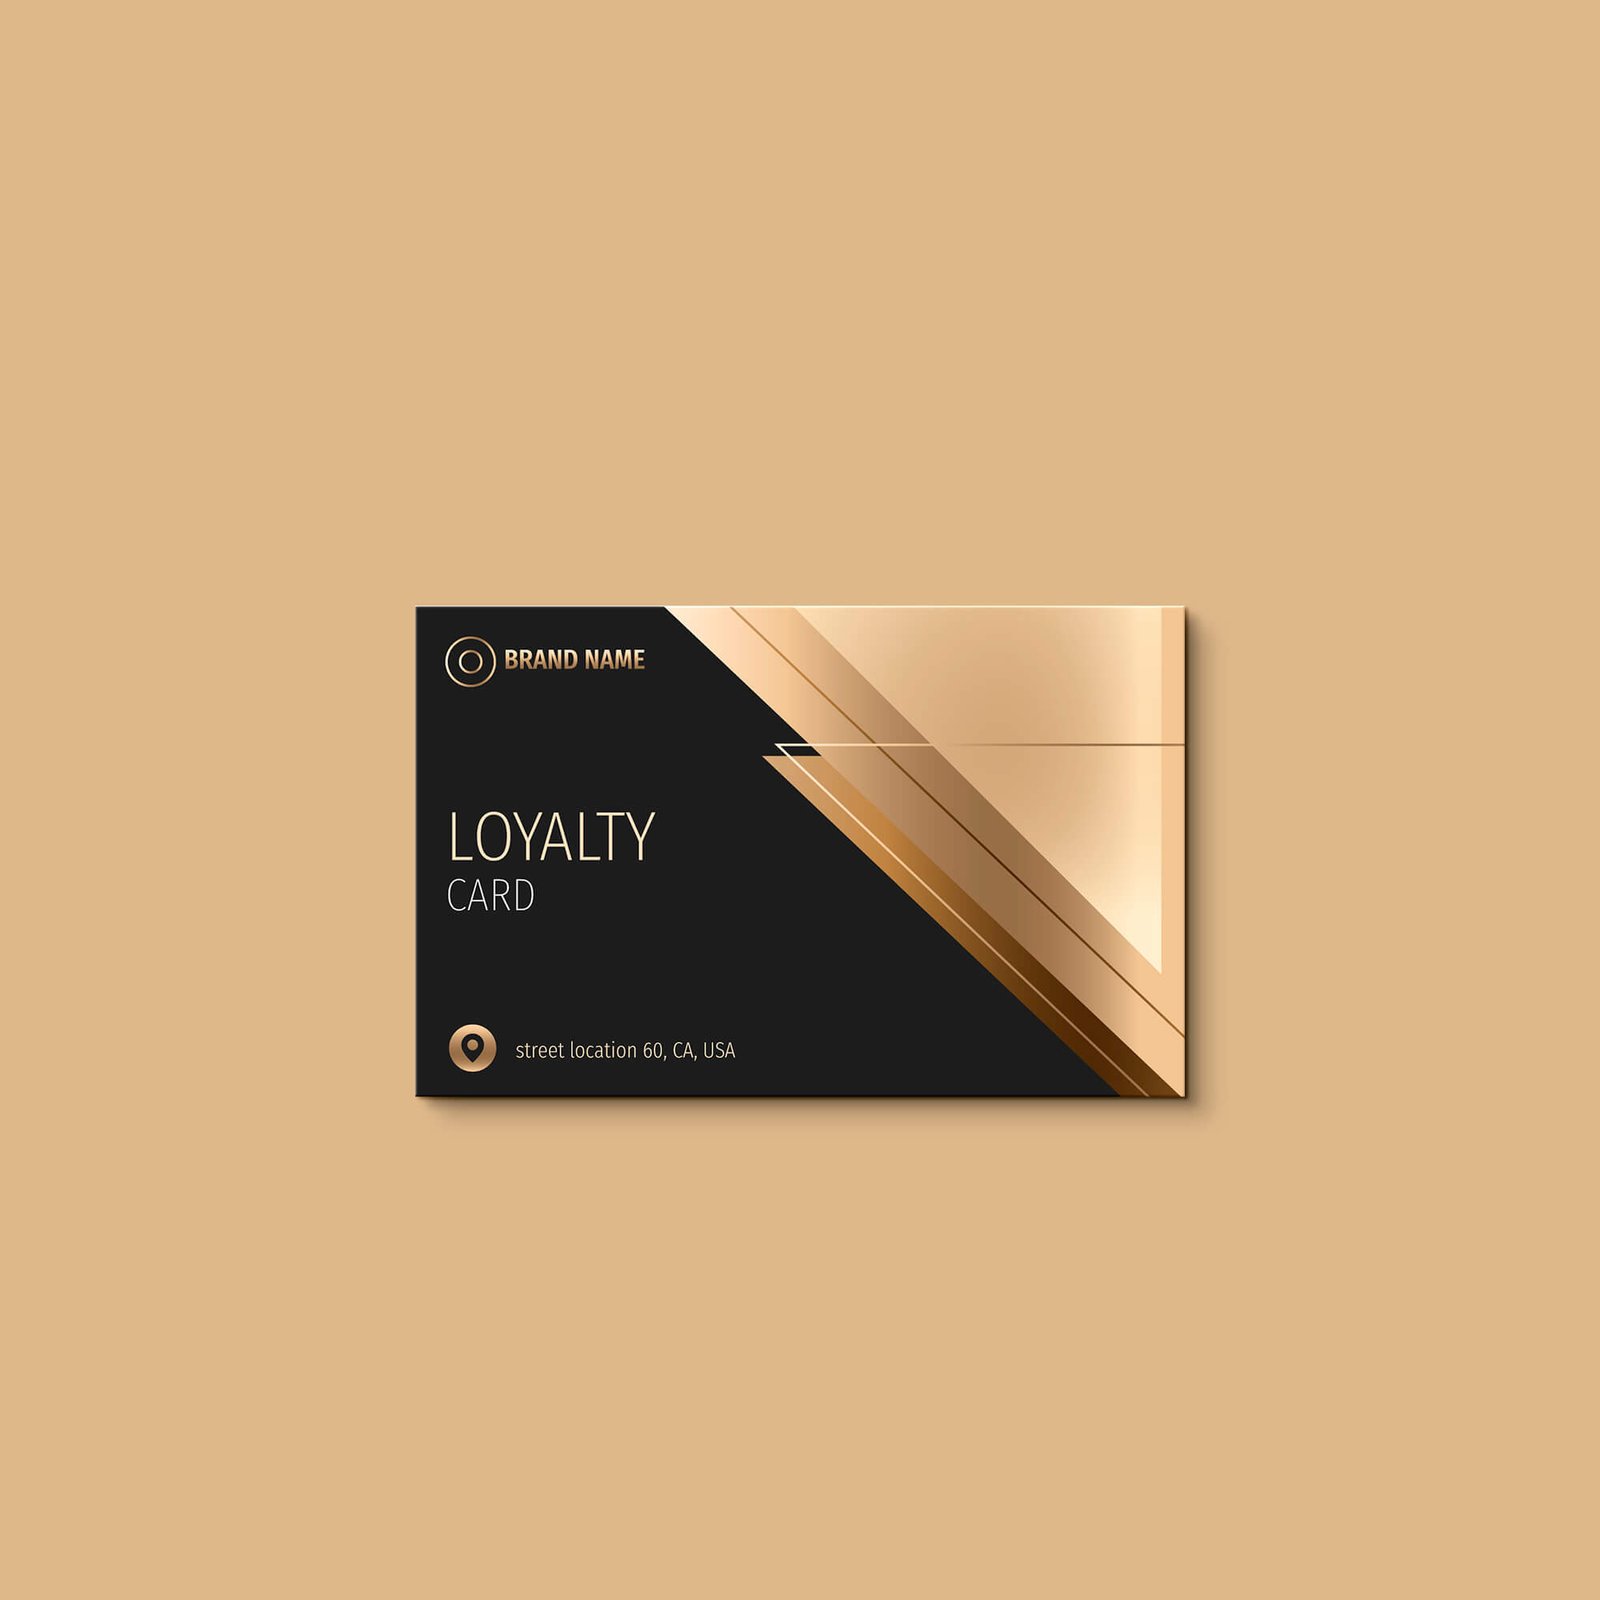 Design Free Loyalty Card Mockup PSD Template